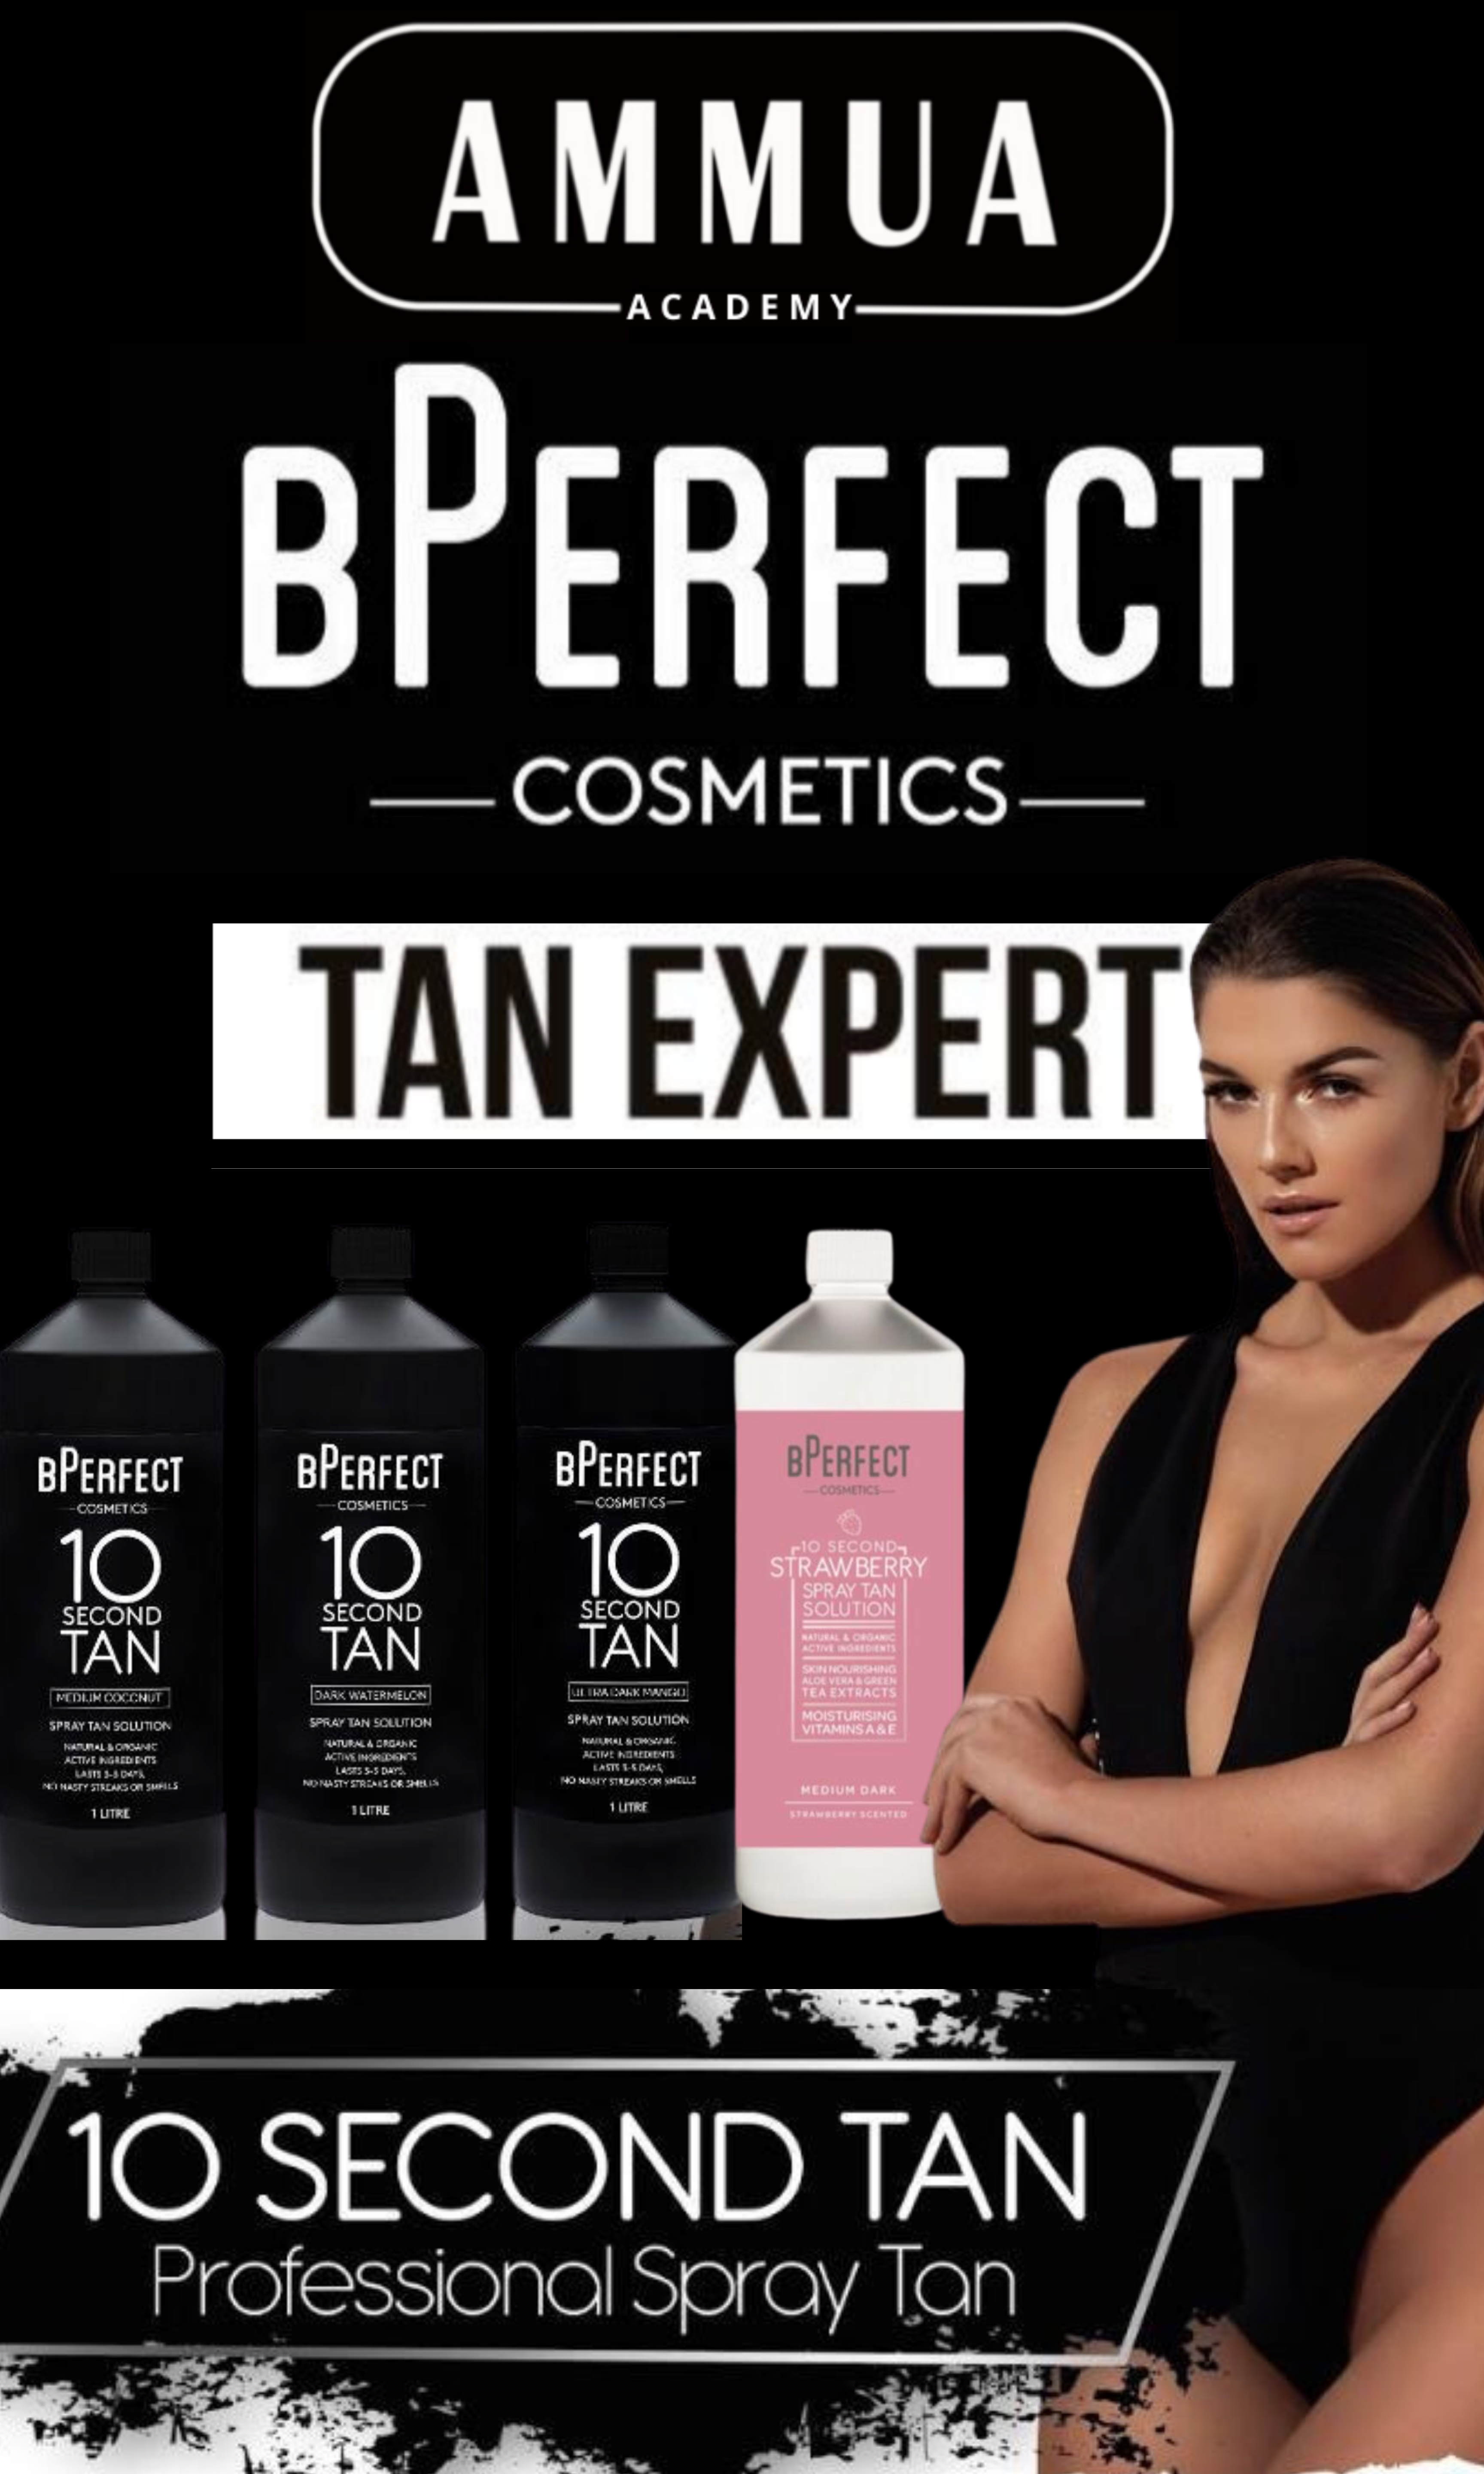 Bperfect Tan Expert Spray Tanning Course